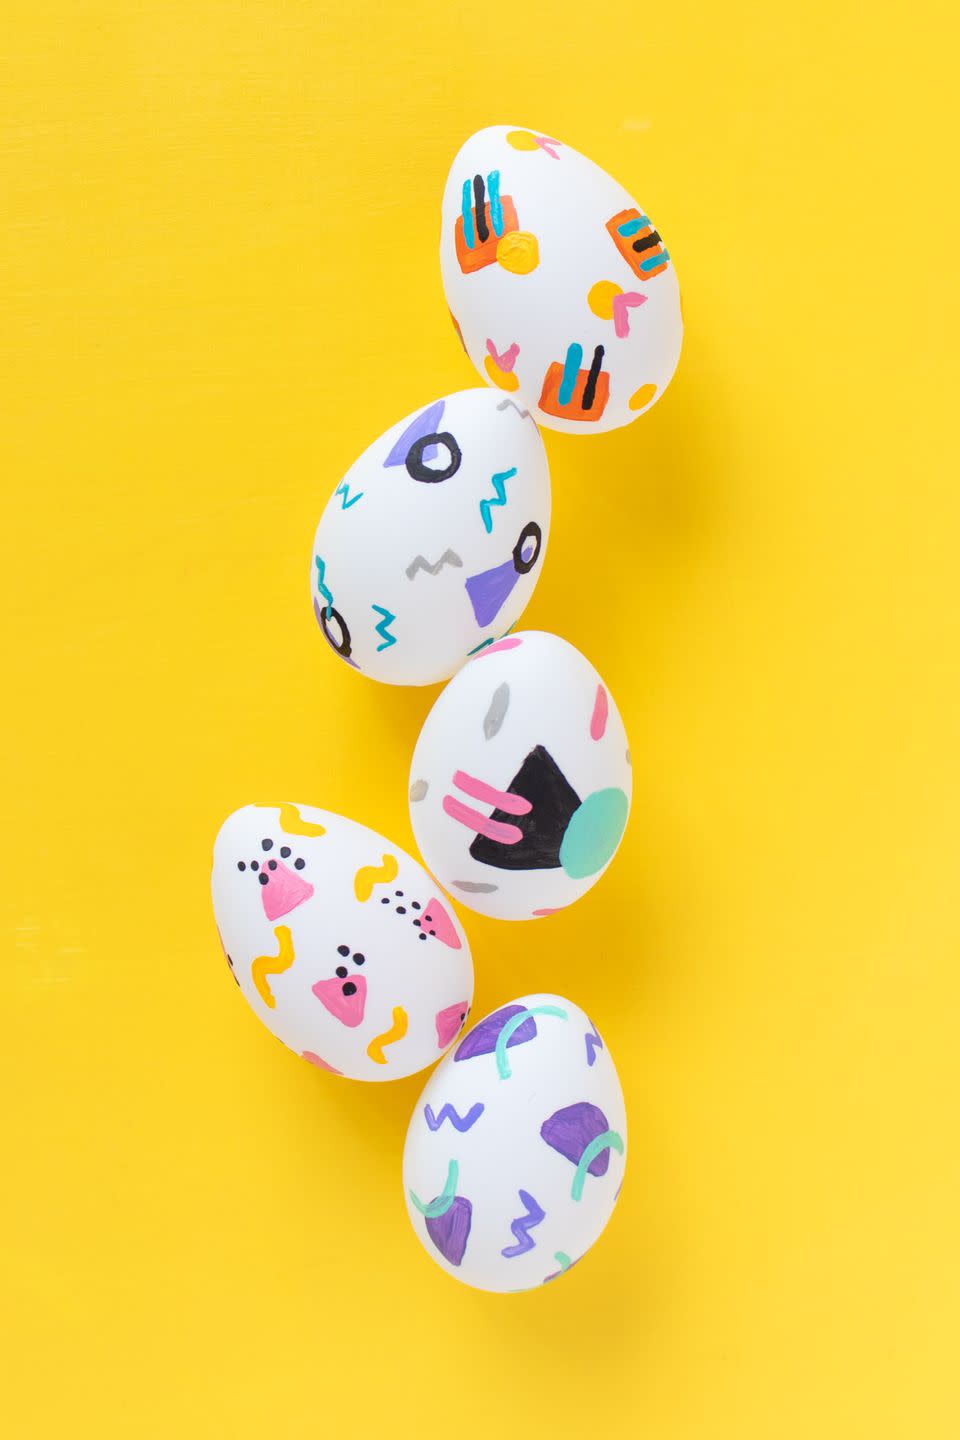 '90s-Patterned Easter Eggs